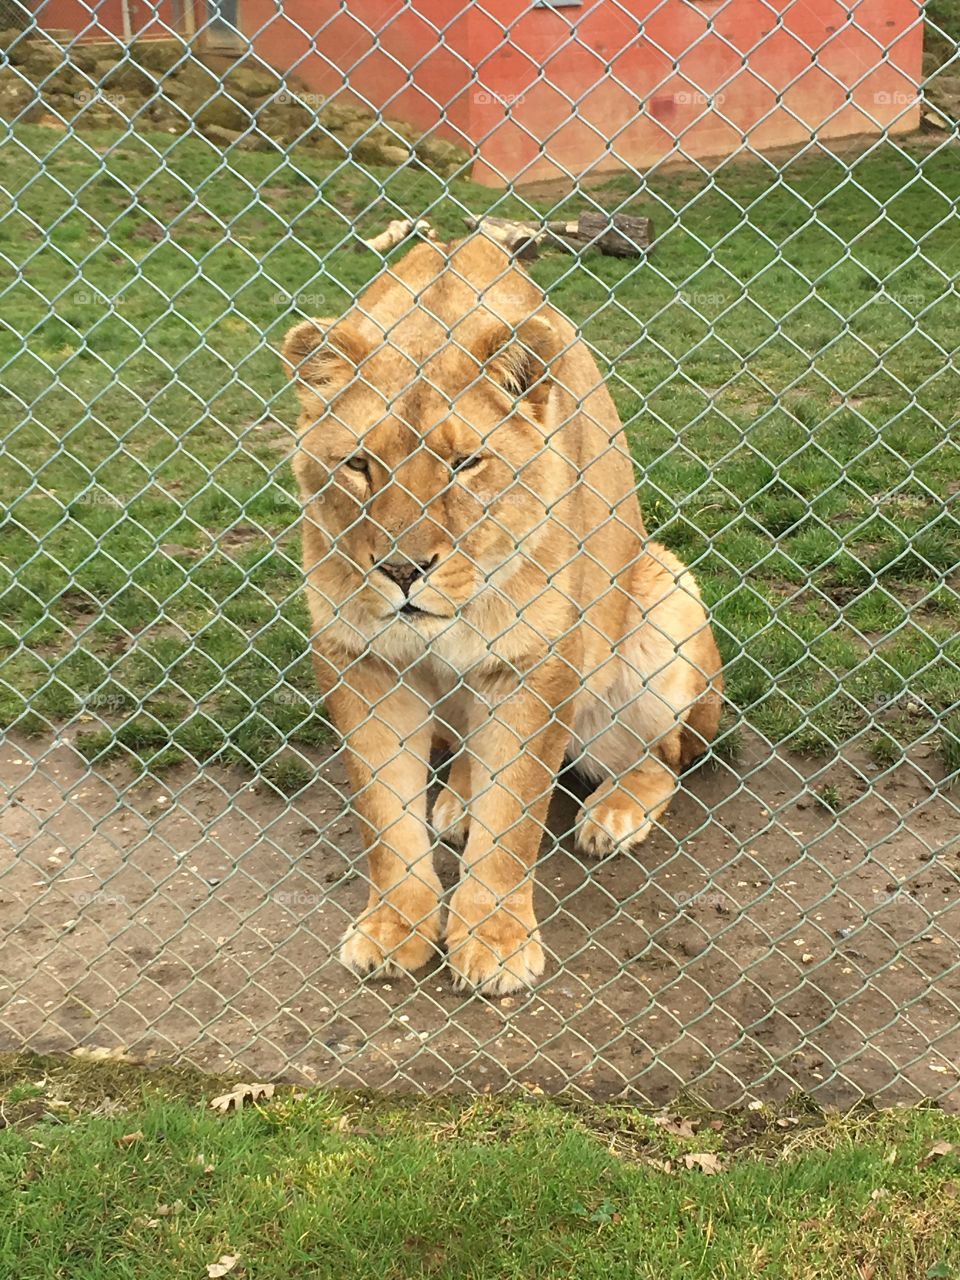 Lion through the fence 